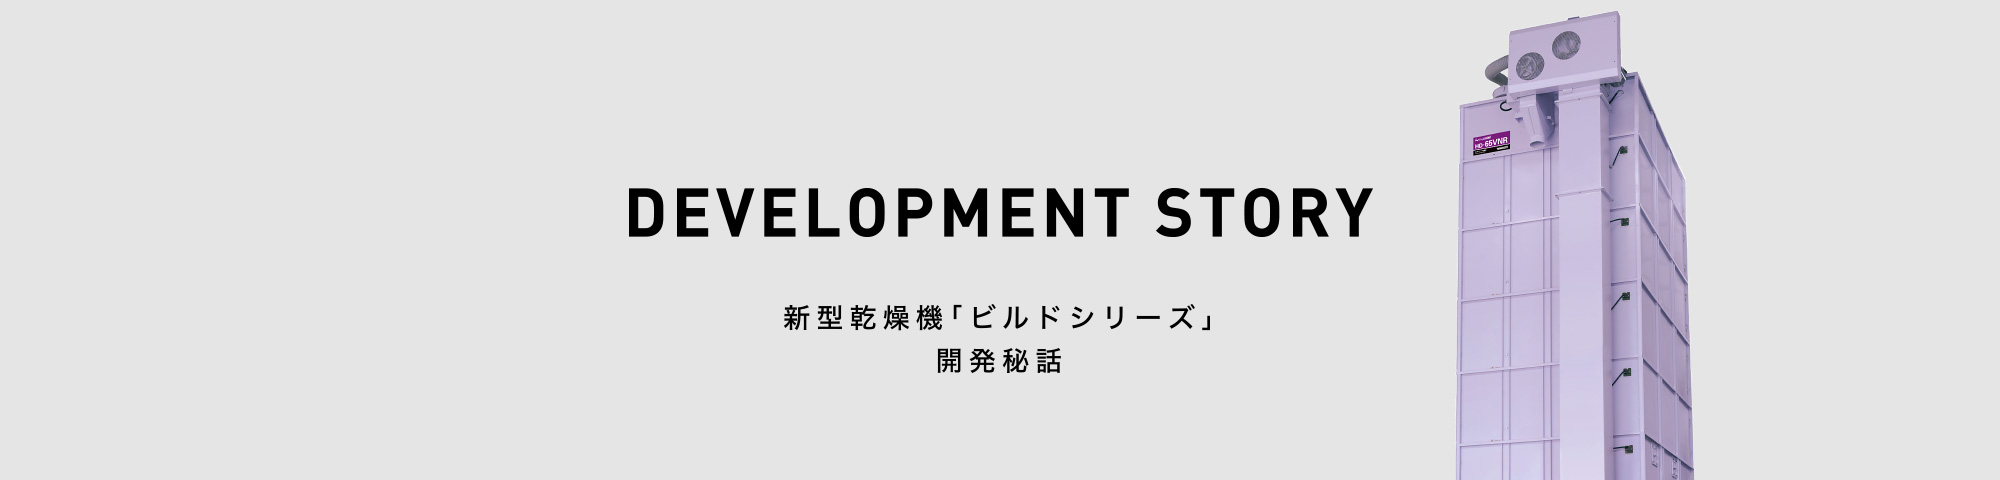 DEVELOPMENT STORY -新型乾燥機「ビルドシリーズ」開発秘話-